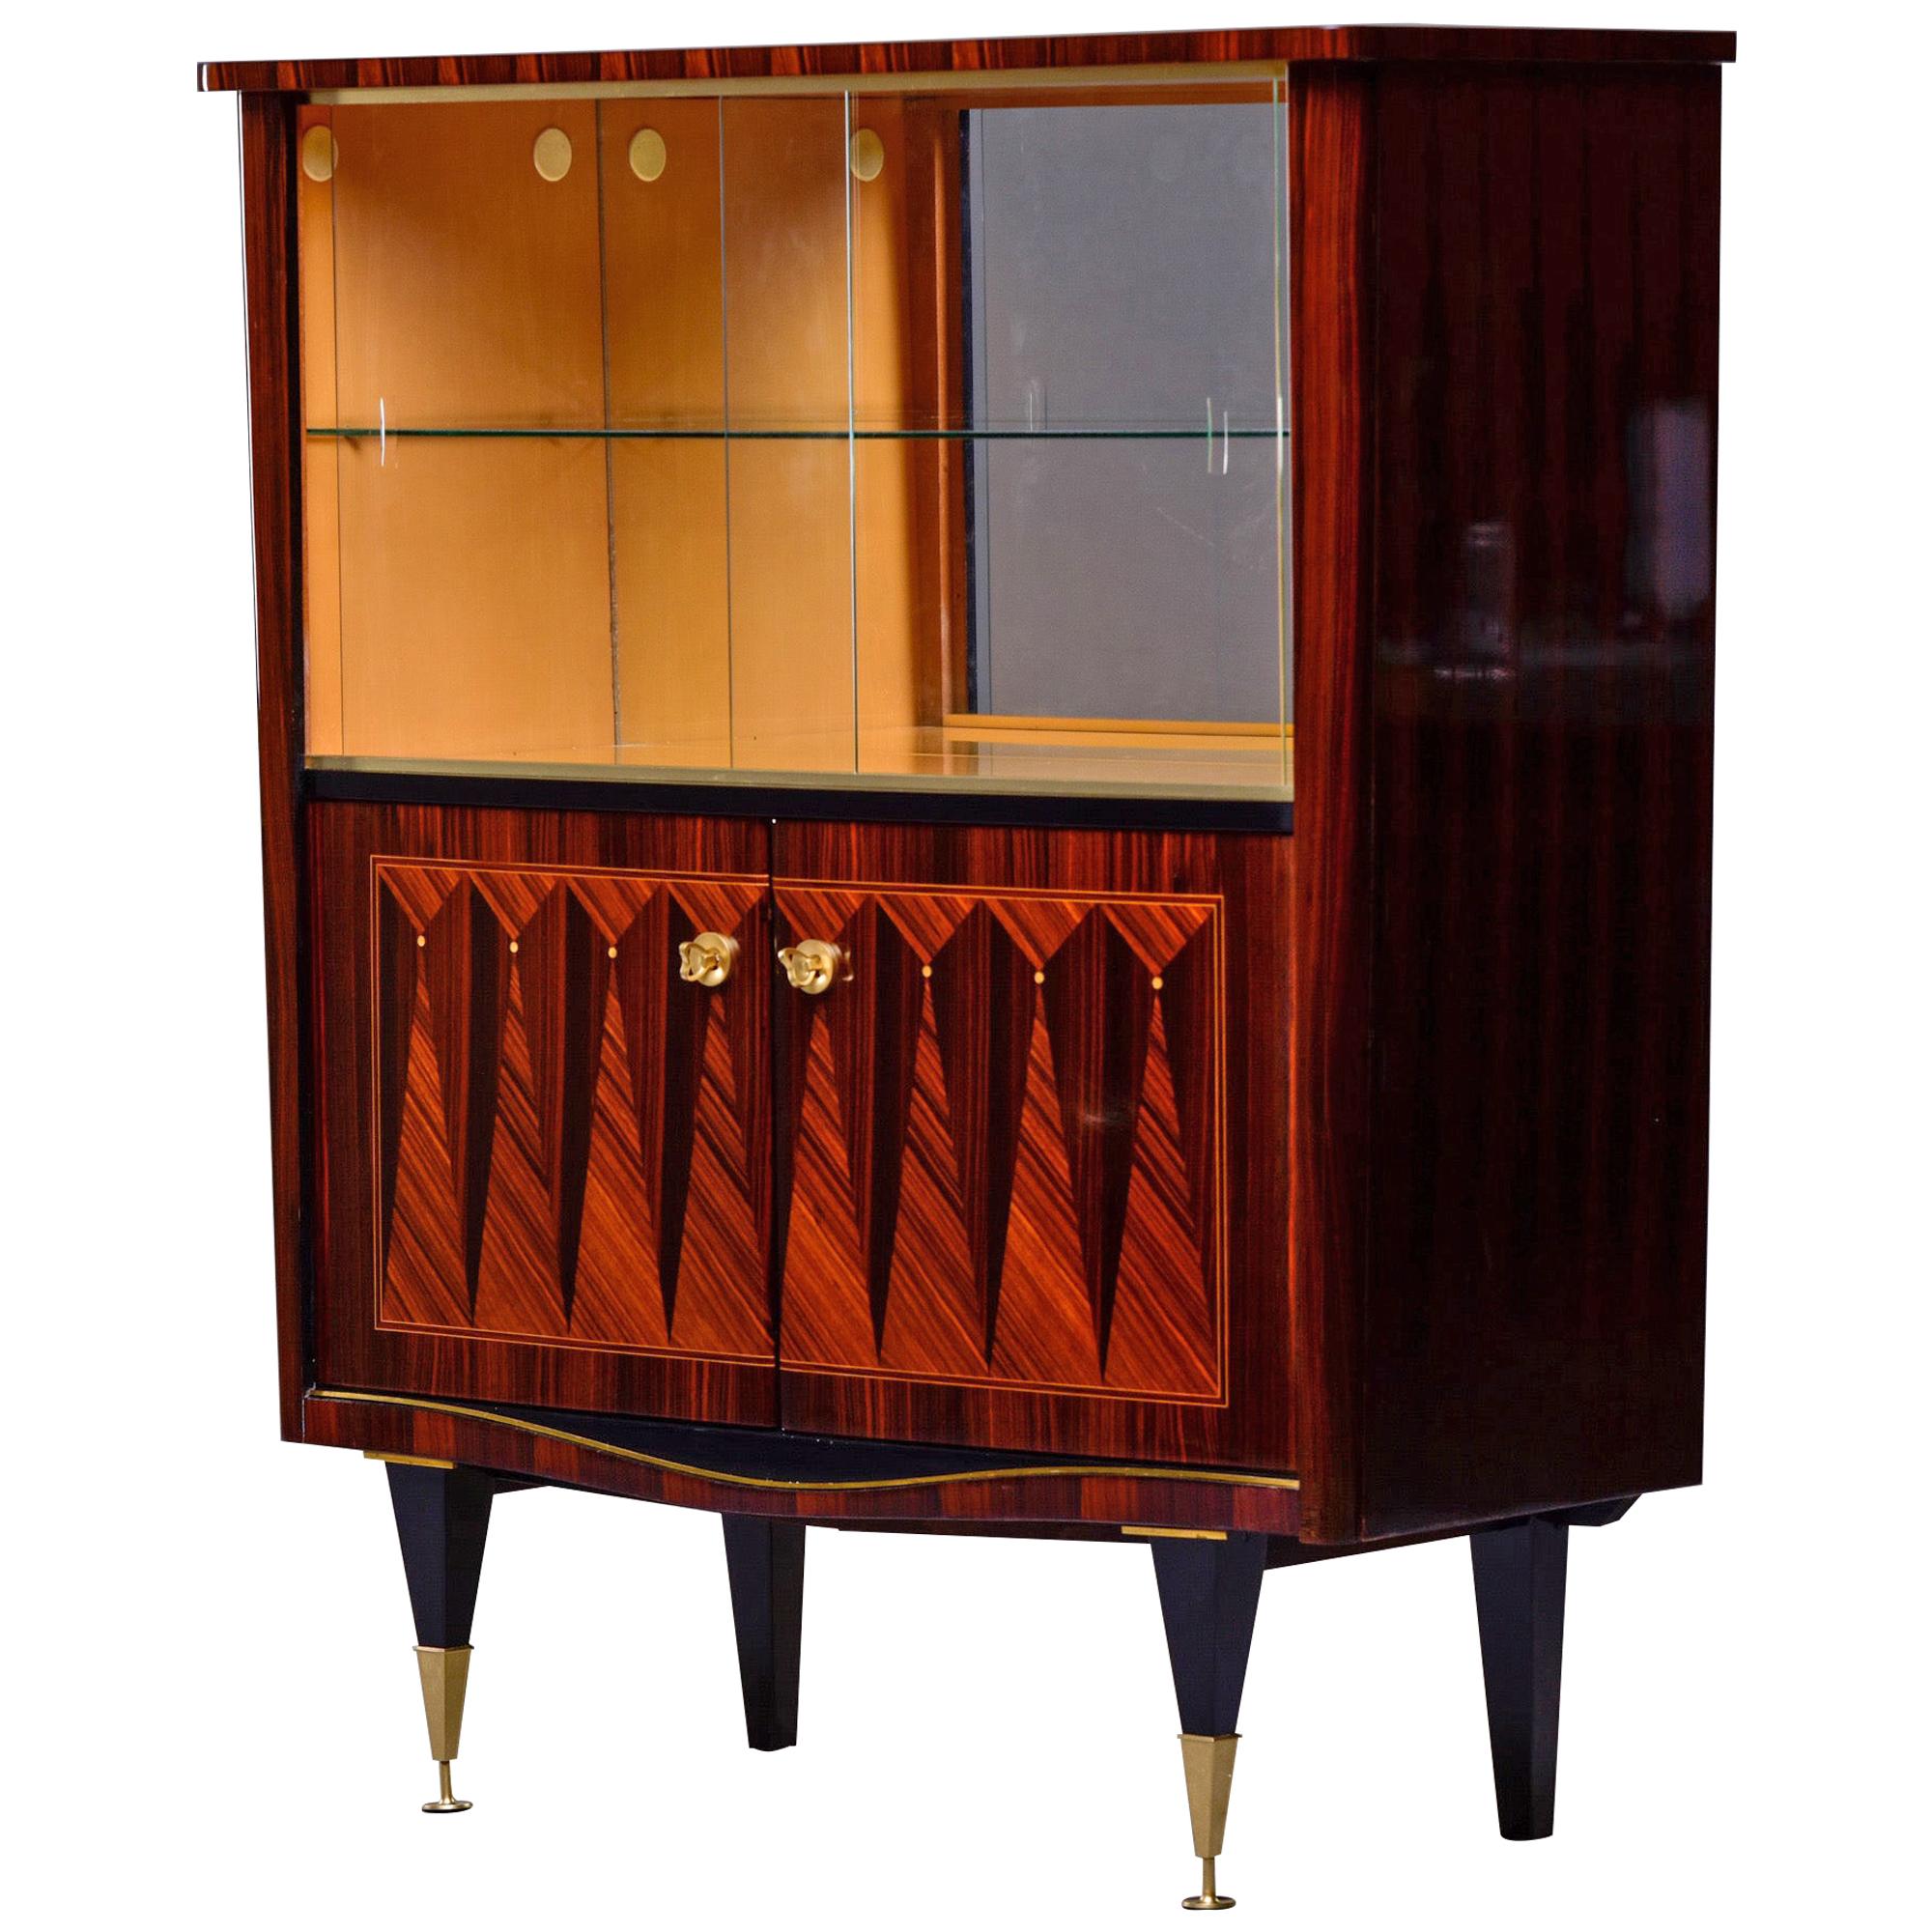 French Art Deco Macassar Bar Cabinet or Vitrine